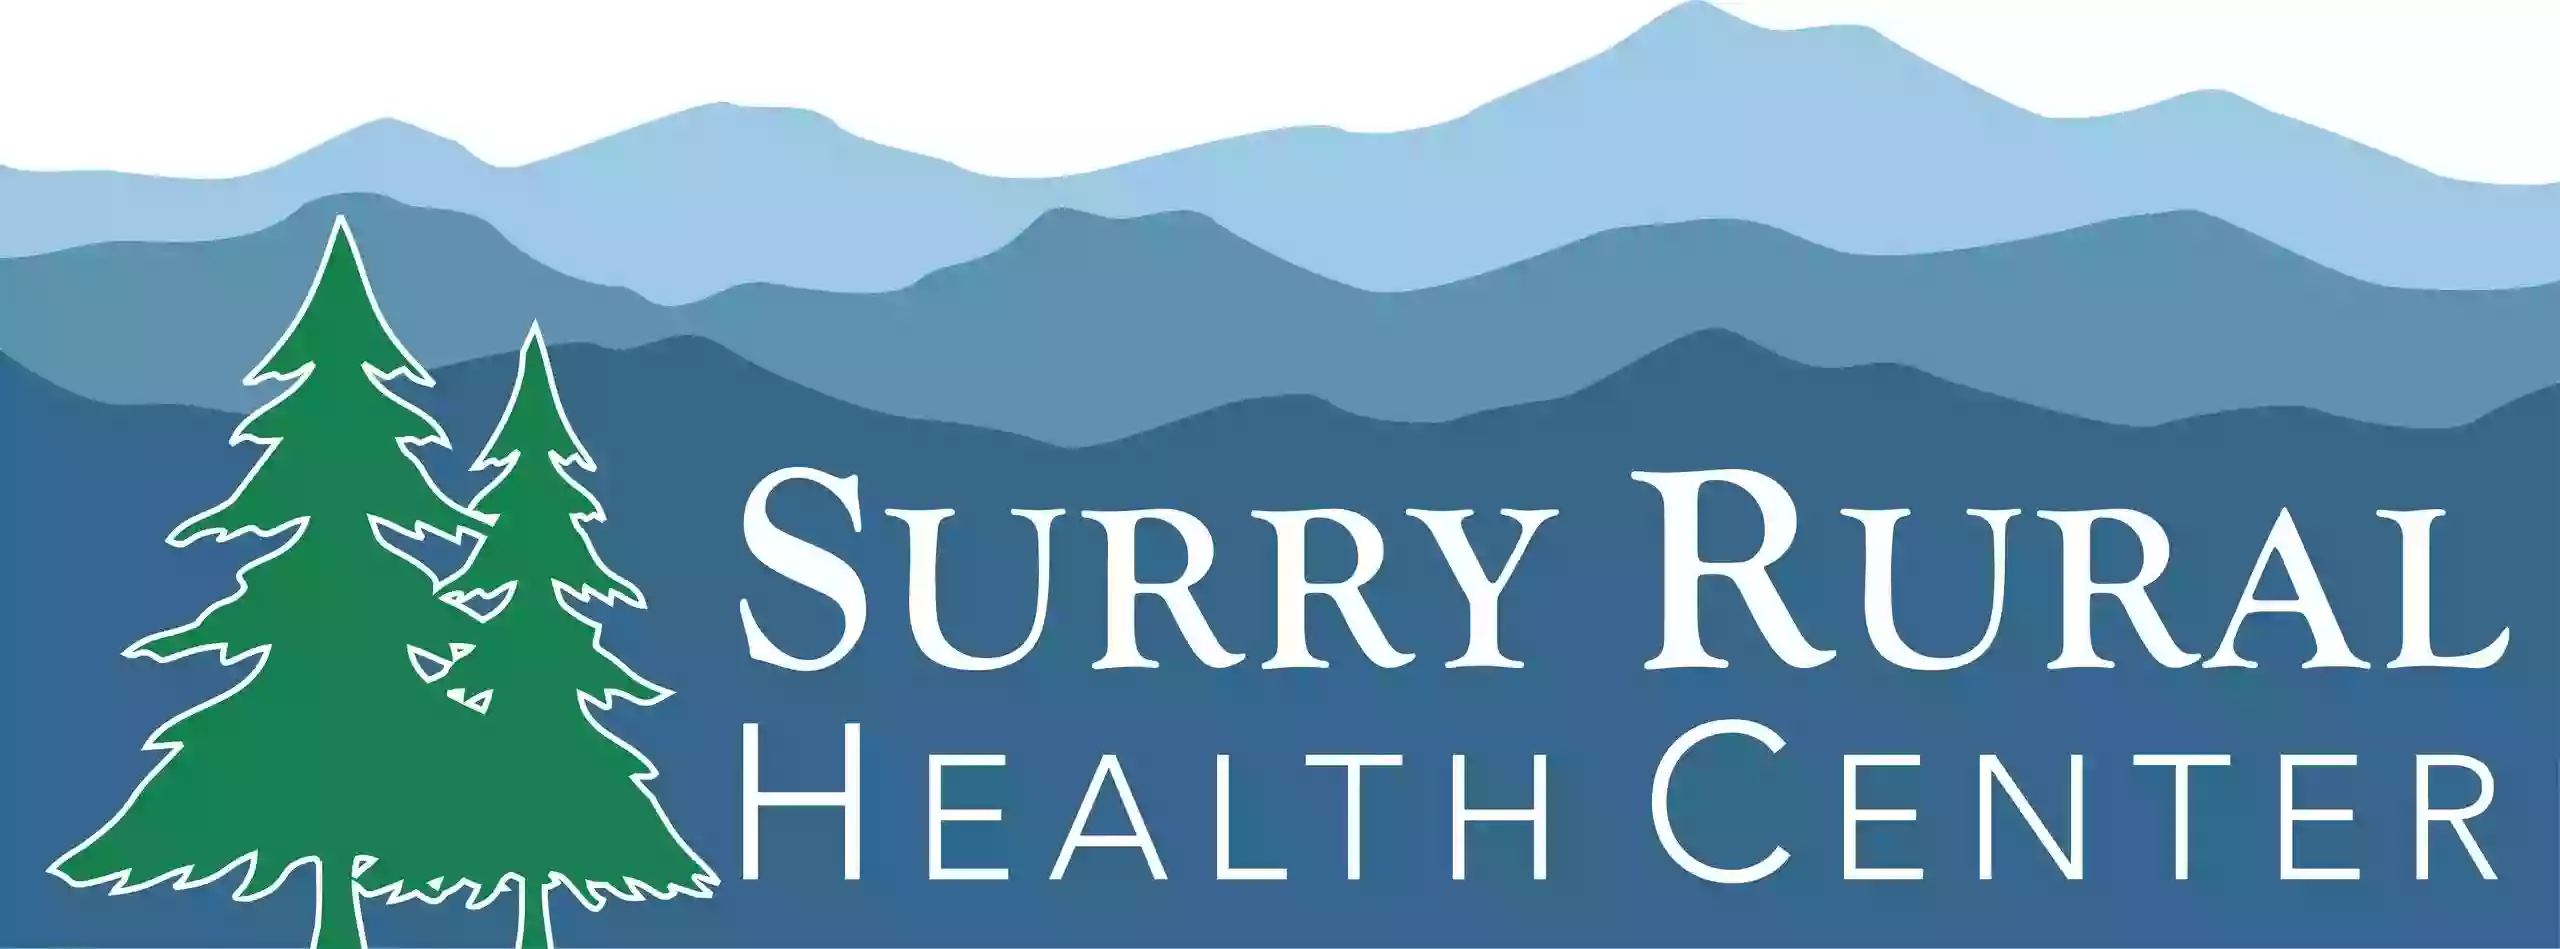 Surry Rural Health Center